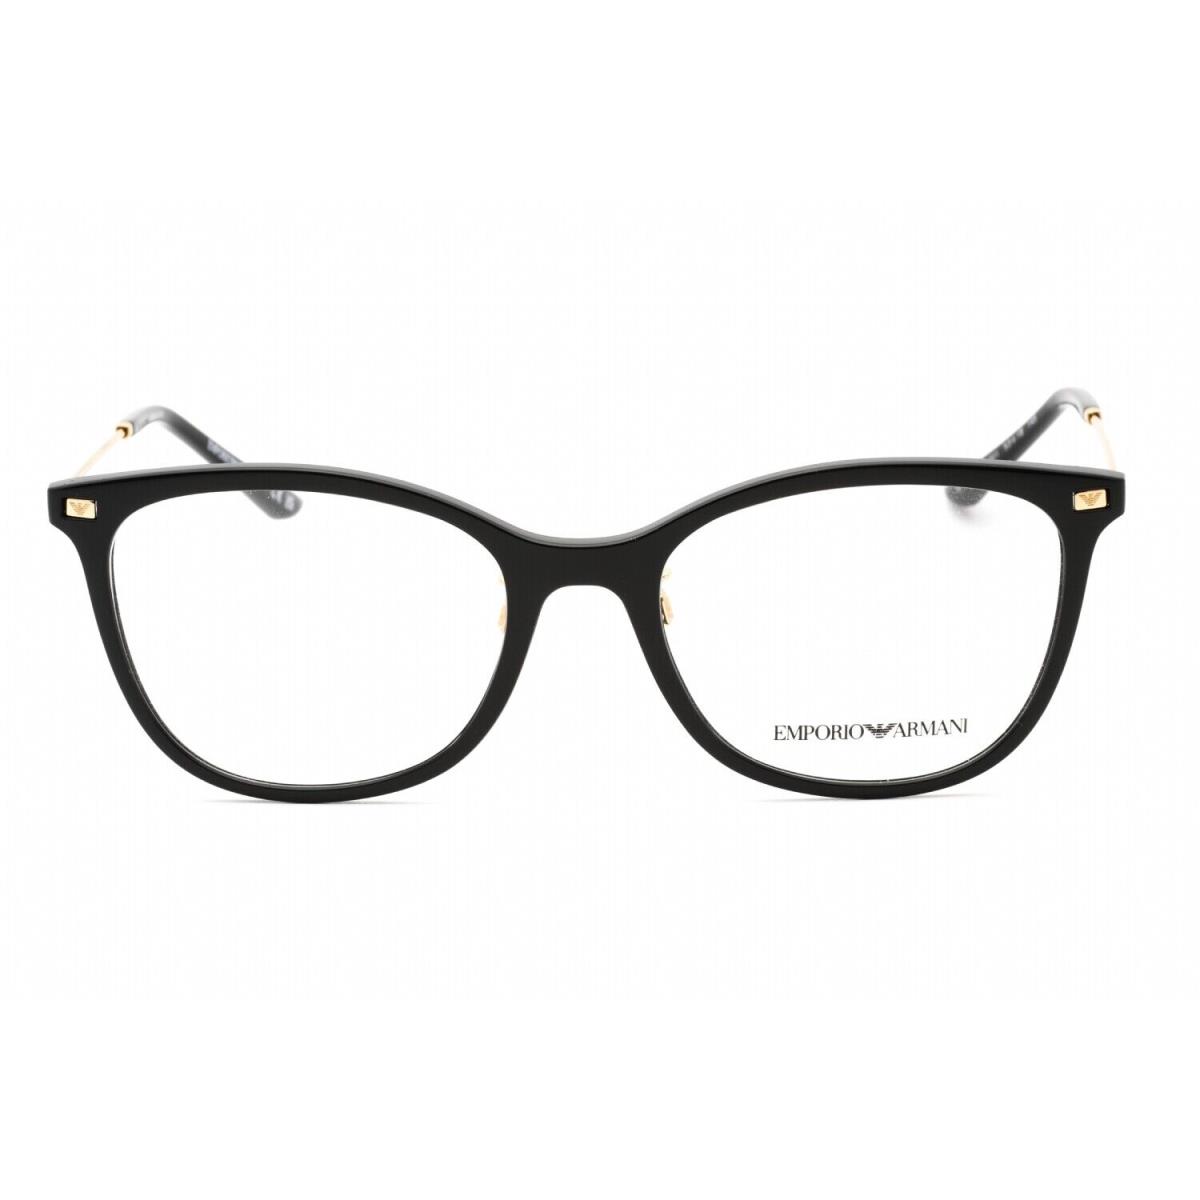 Emporio Armani 0EA3199 5001 Eyeglasses Black Frame 53 Mm